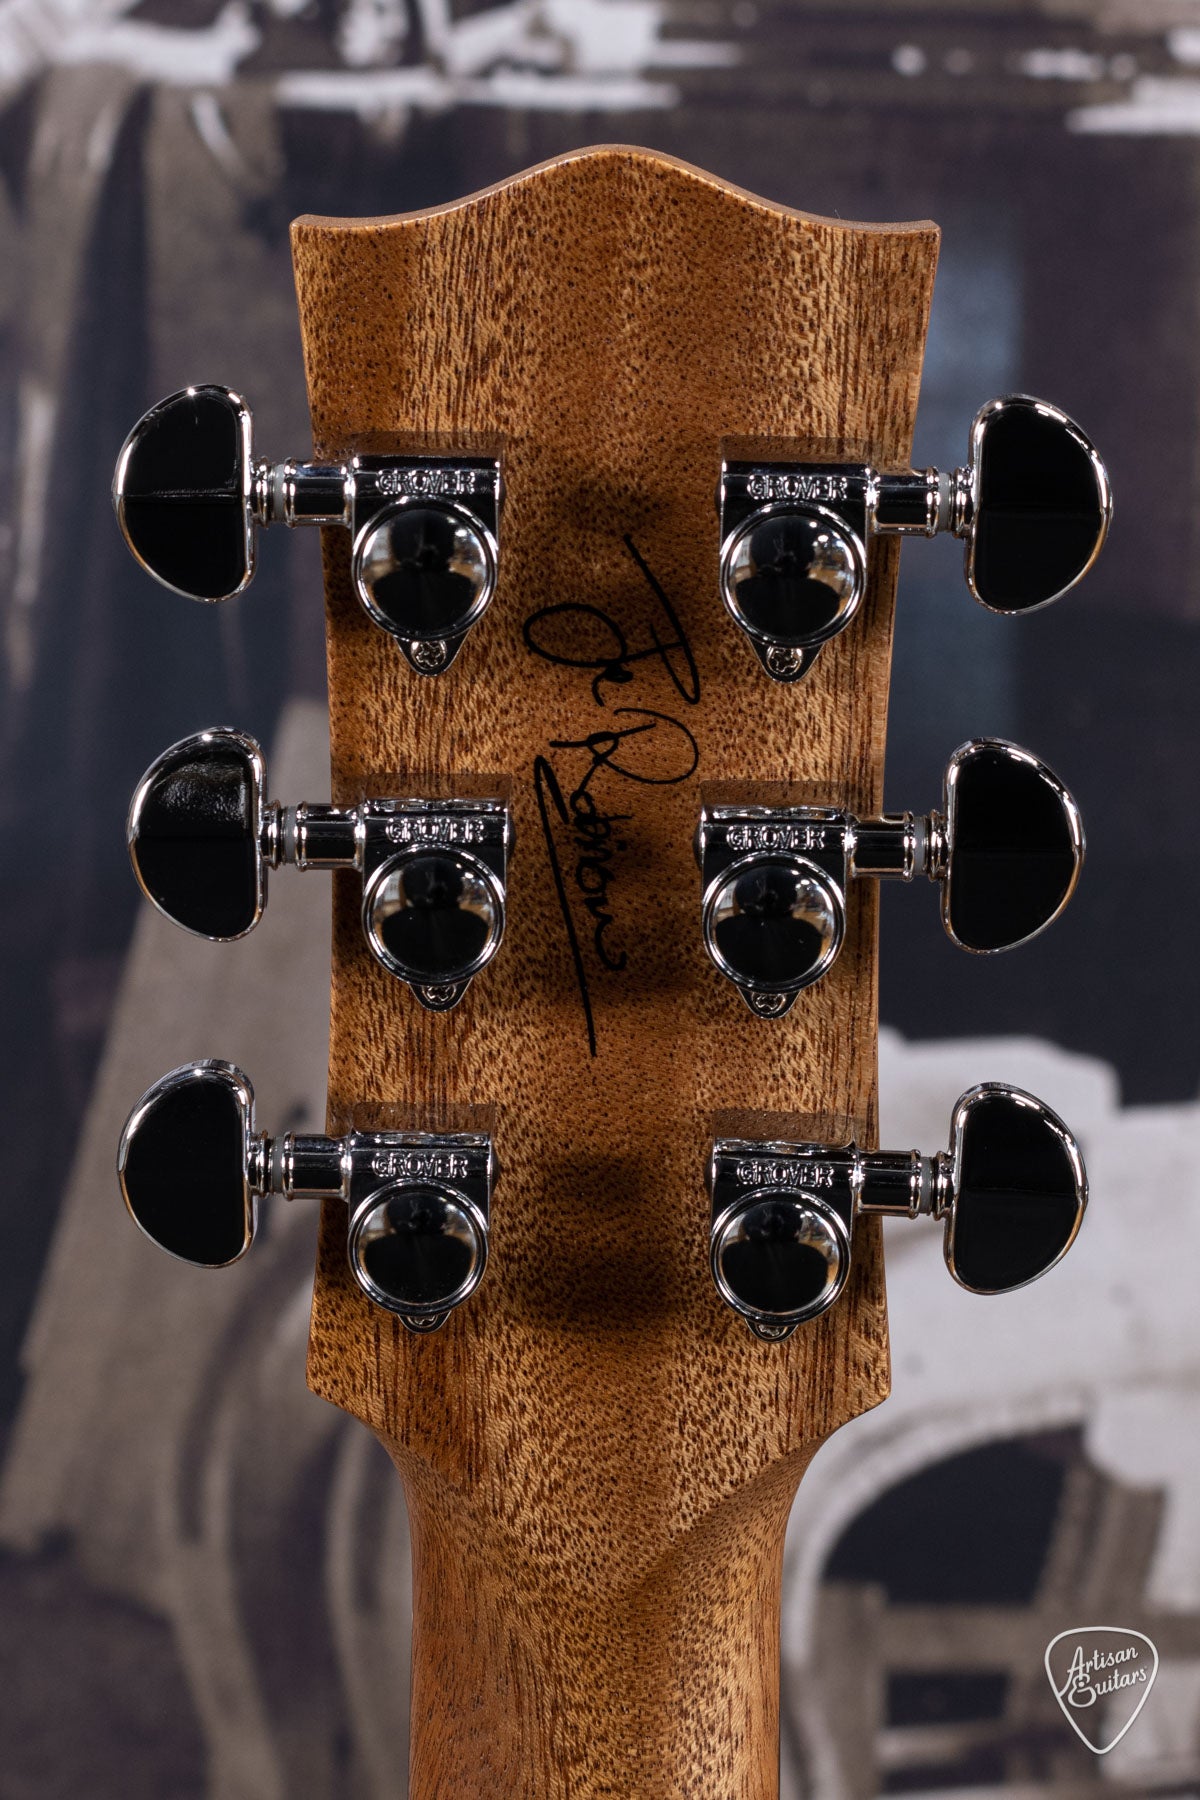 Maton Guitars 808C J.R. Joe Robinson Signature Cutaway - 16266